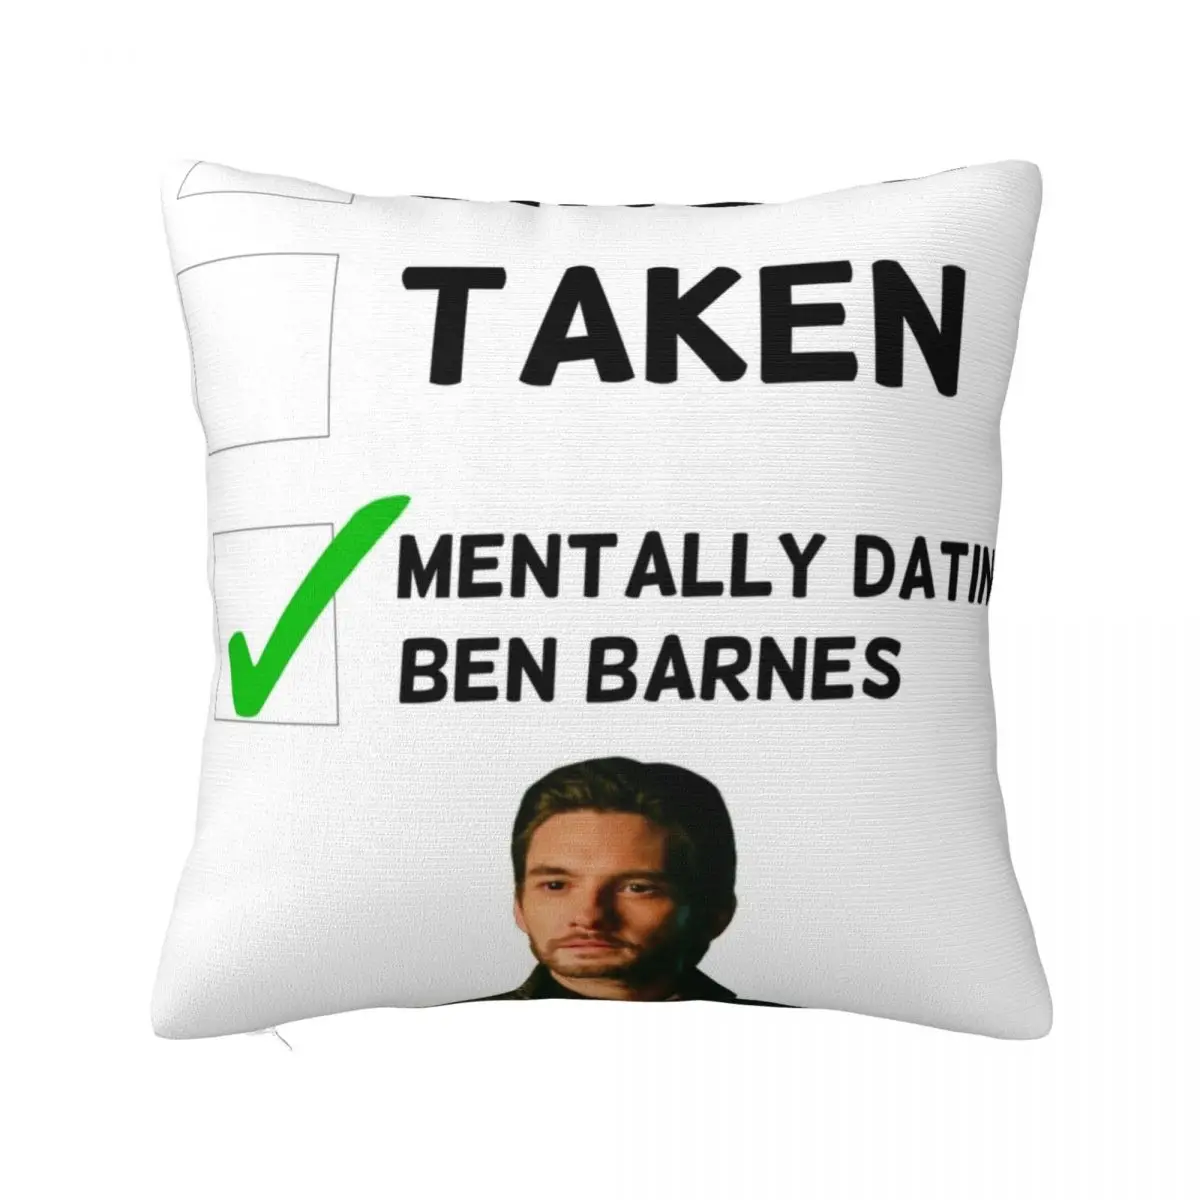 

Наволочки Ben Barnes для диванных подушек, домашний декор, роскошные диванные подушки, Наволочки